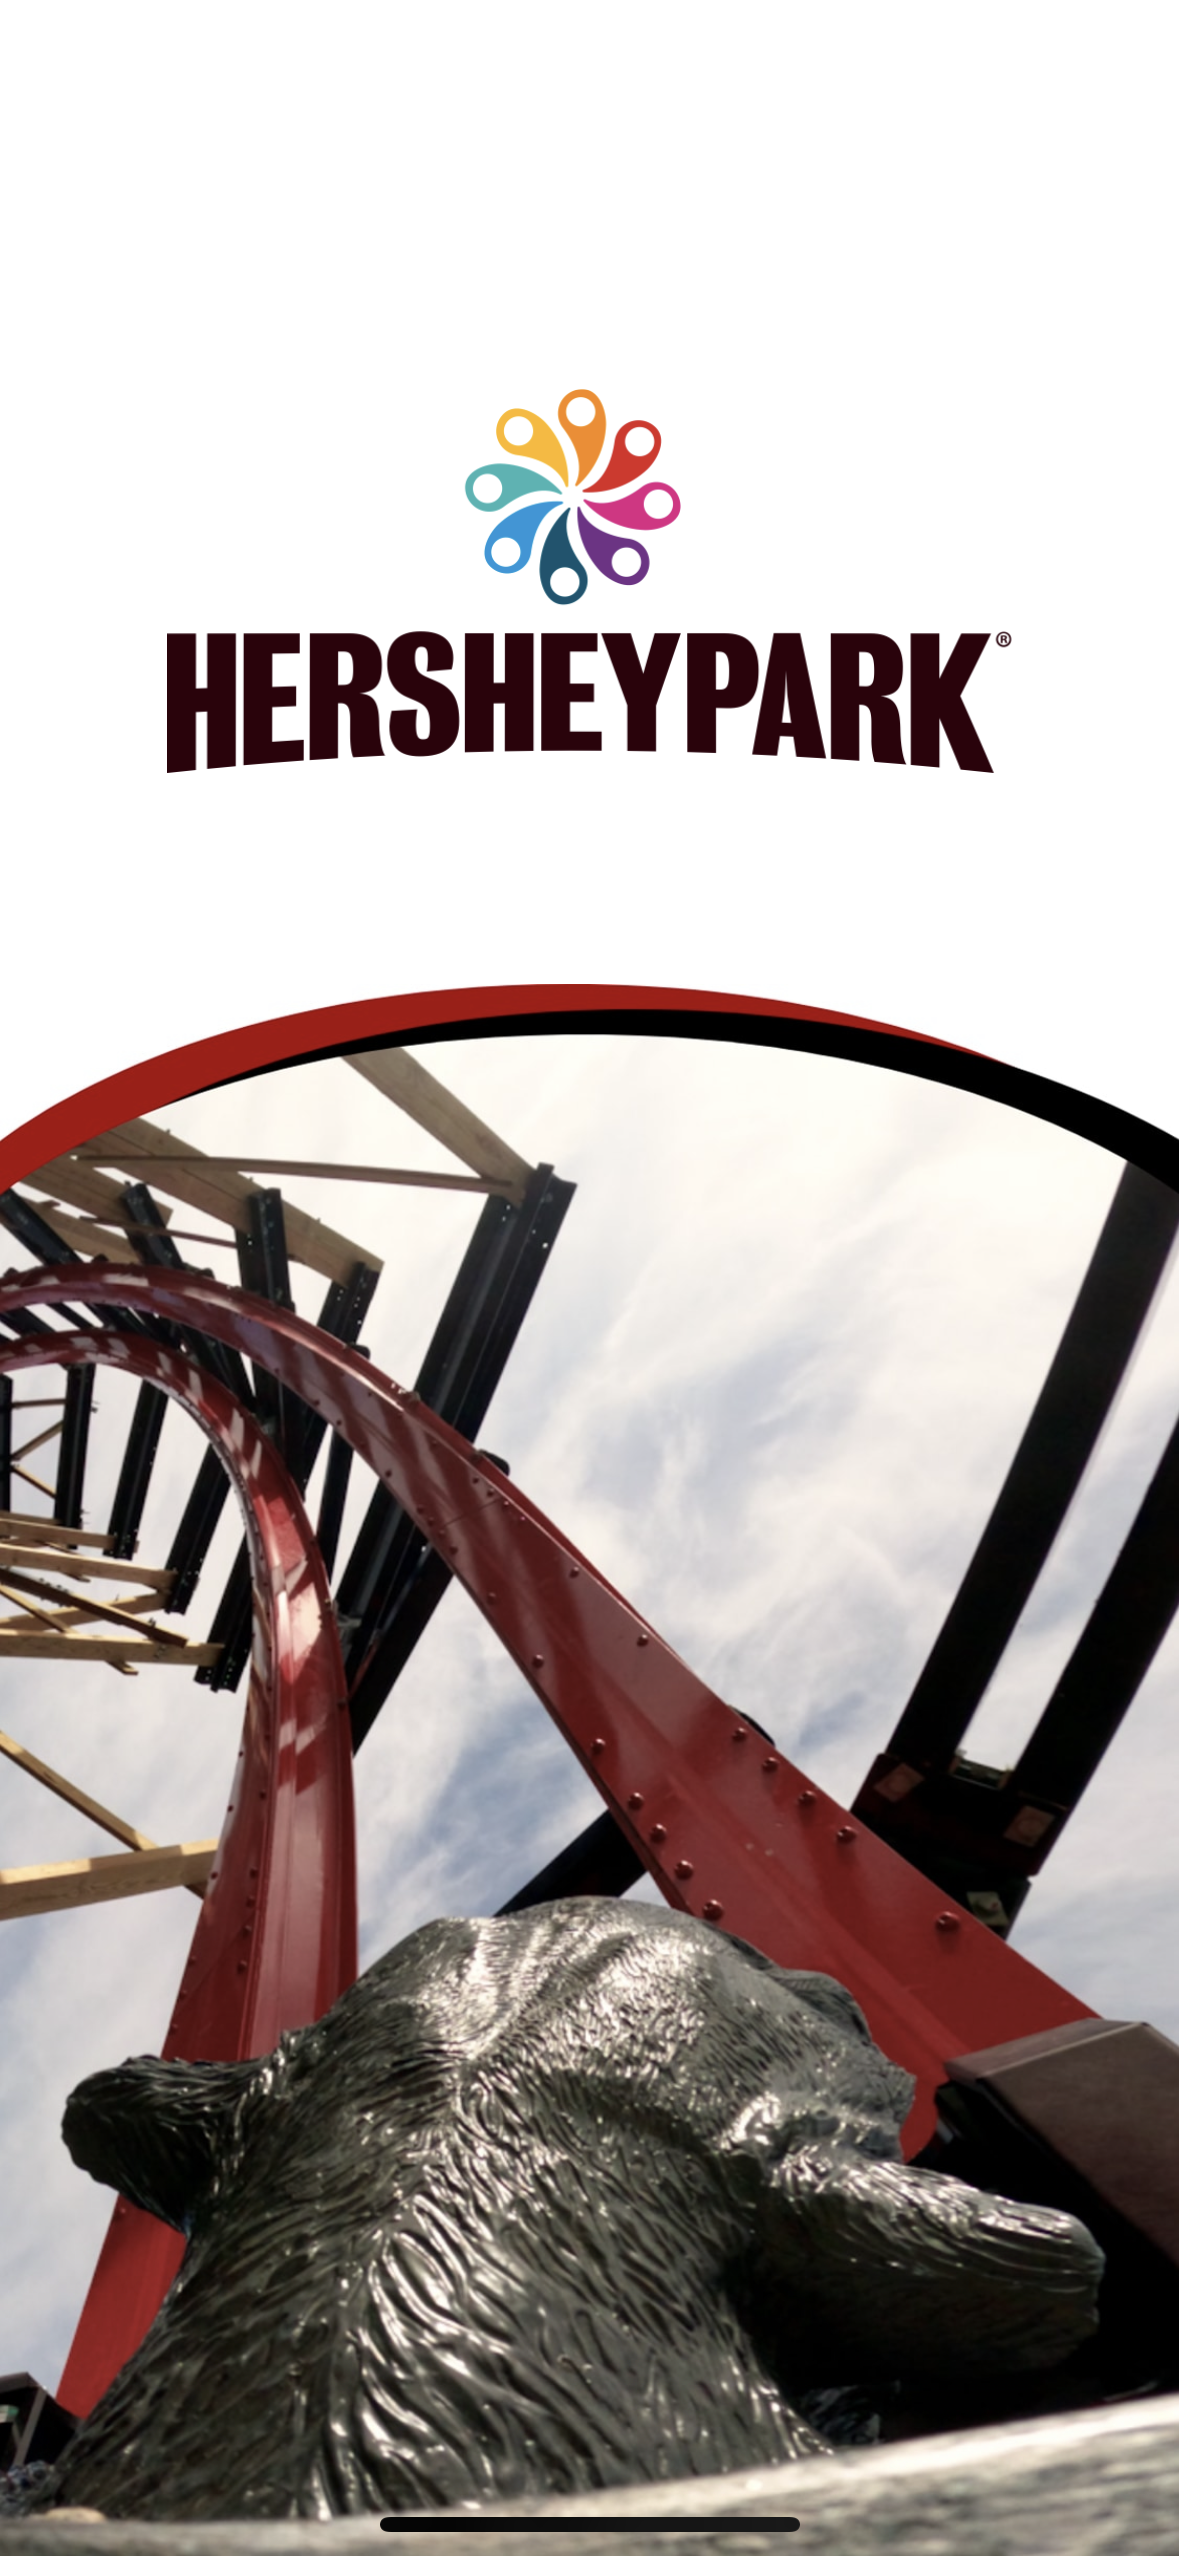 Hersheypark App